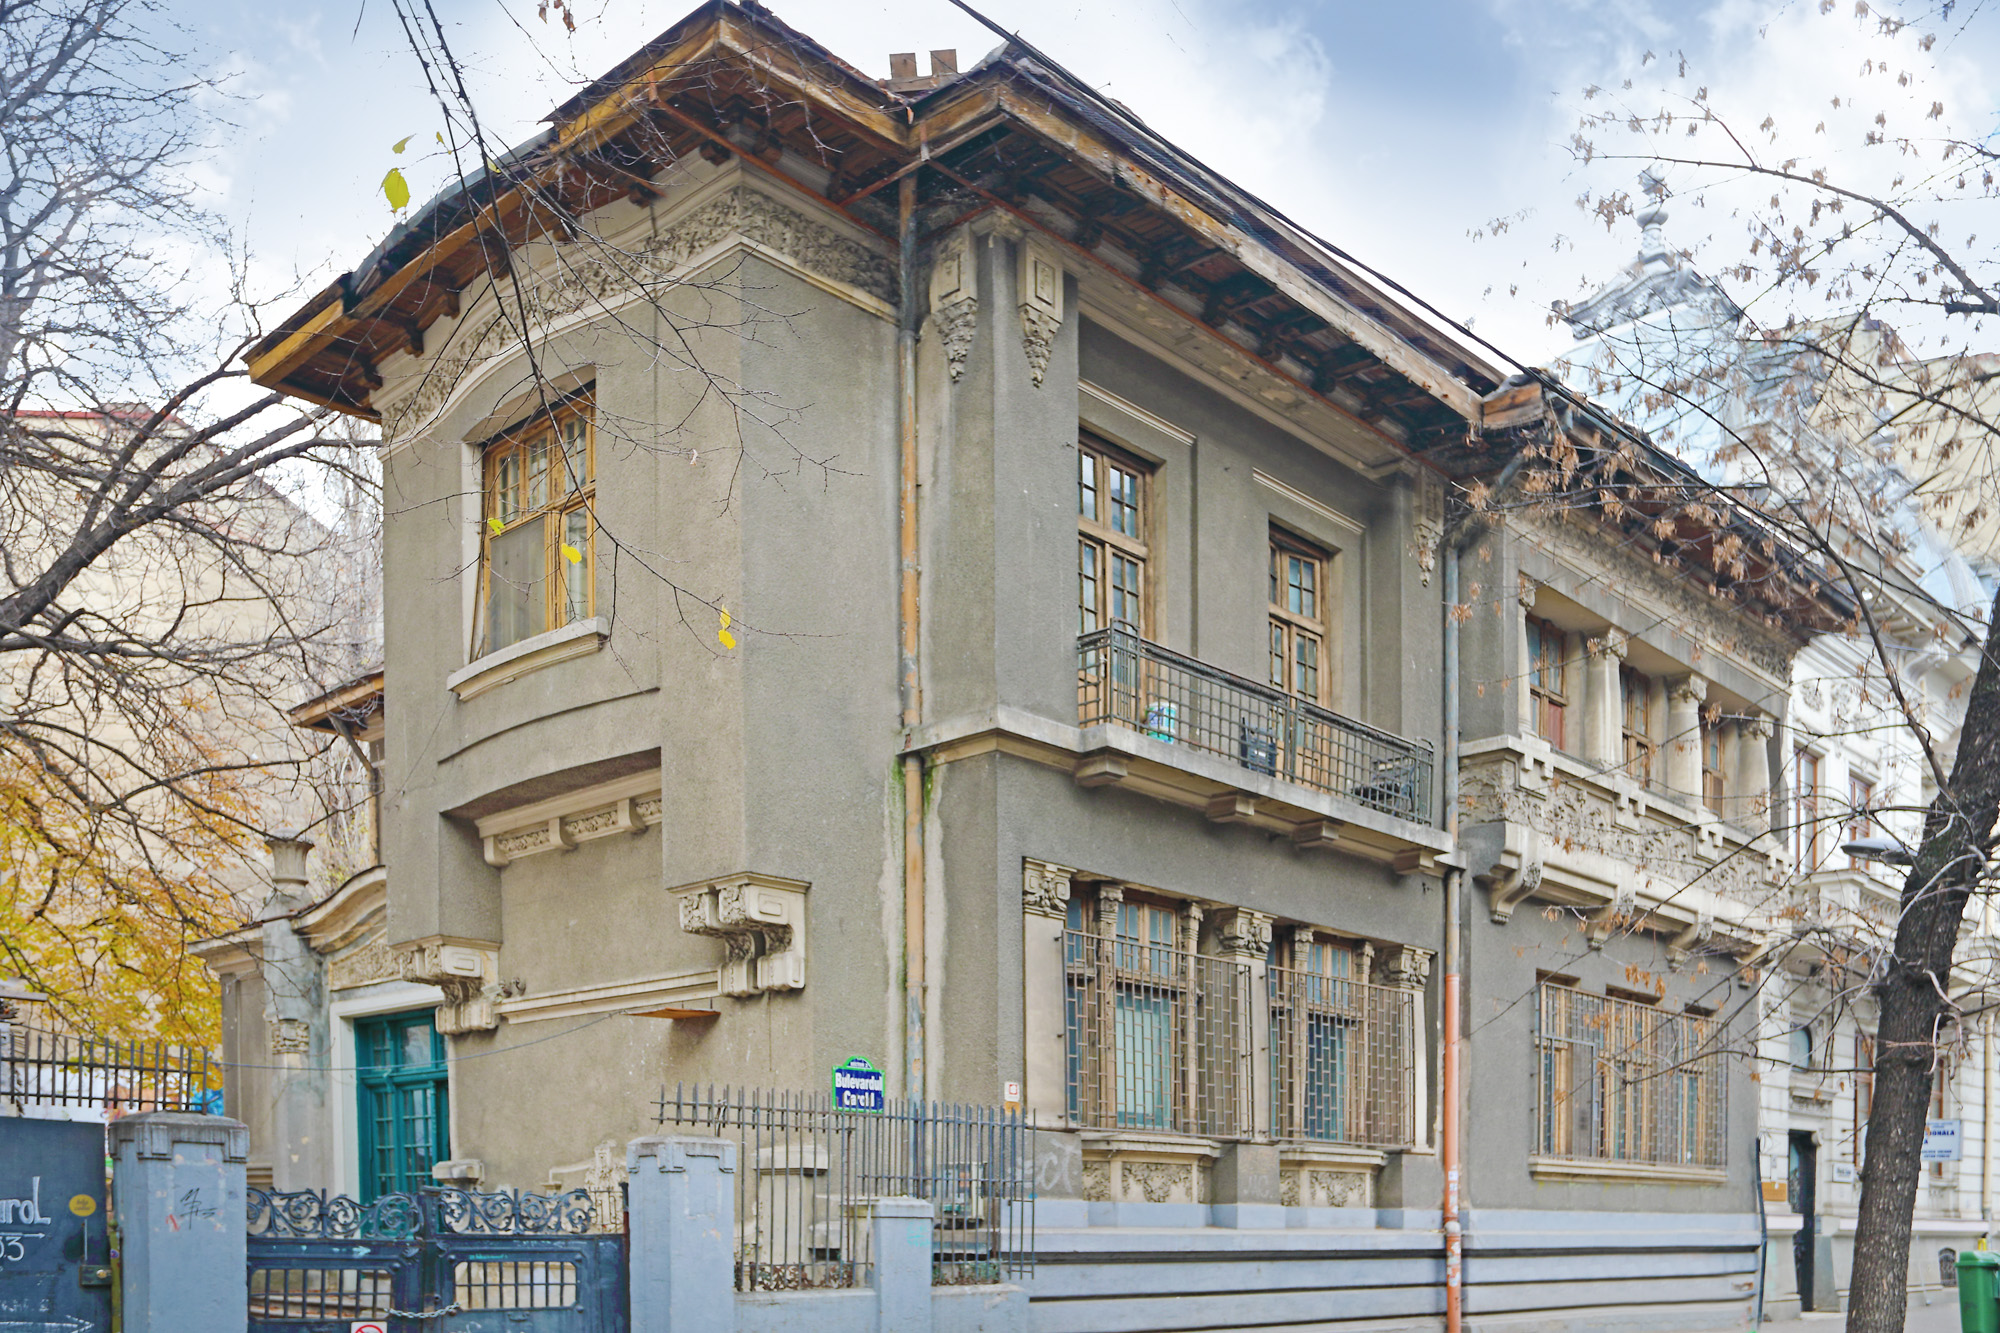 House Av. Mihail Pacanu, elegant early 20th century building, Arh. Radu Culcer